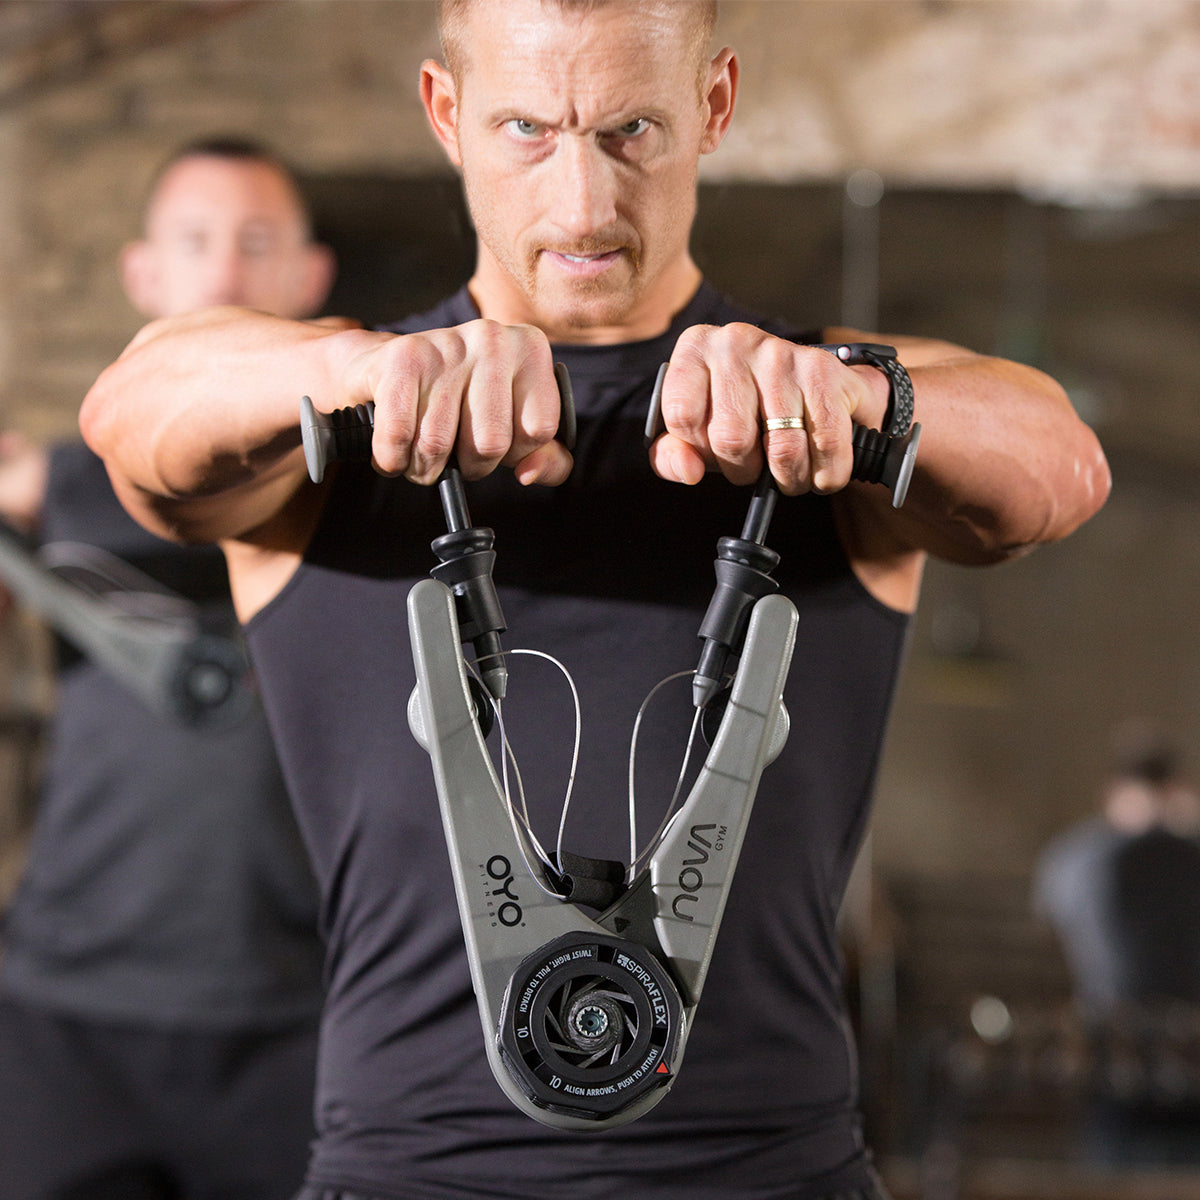 OYO Personal Gym - Full Body Portable Gym Equipment Set for